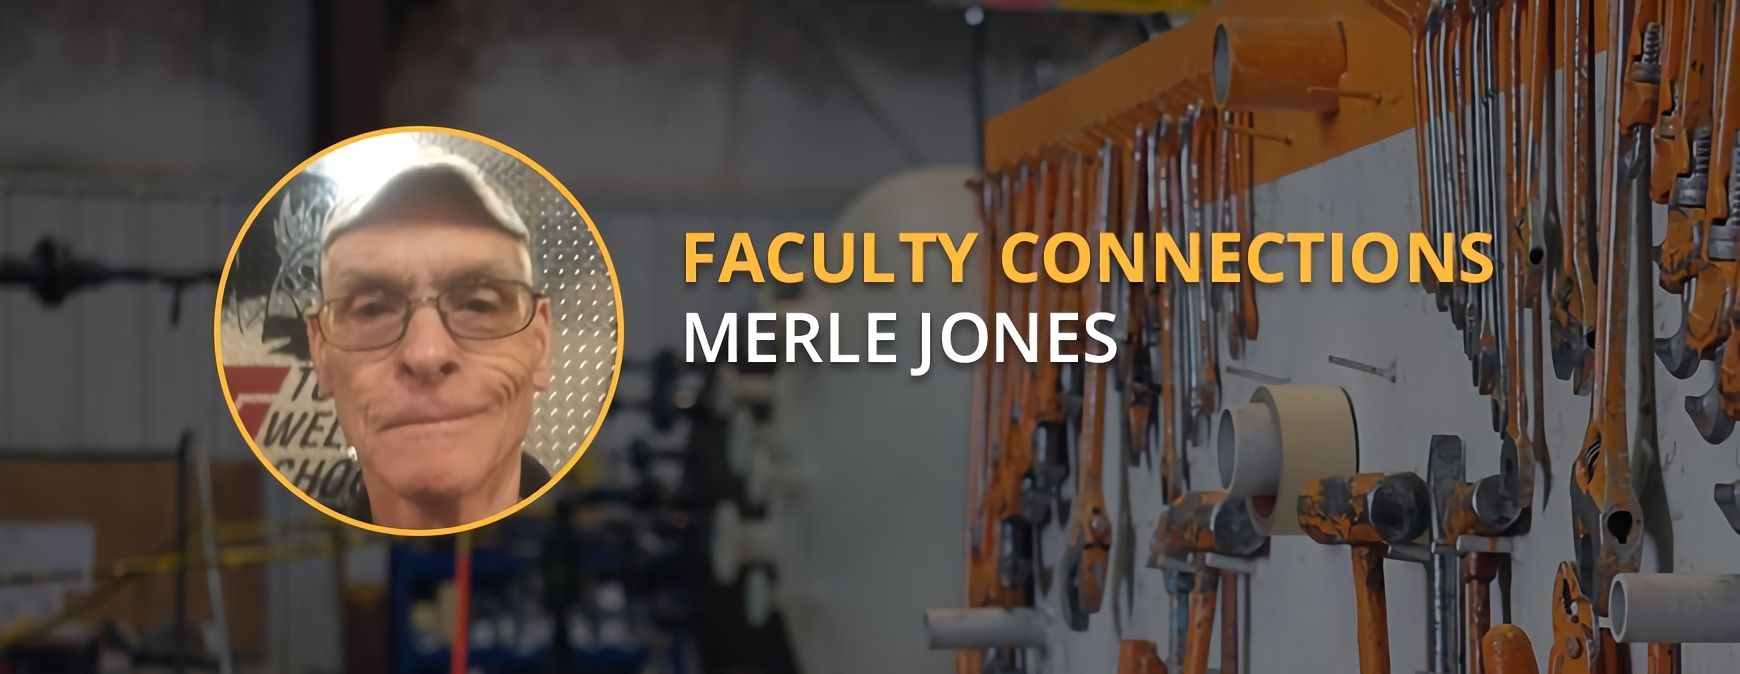 Merle Jones Faculty Connection